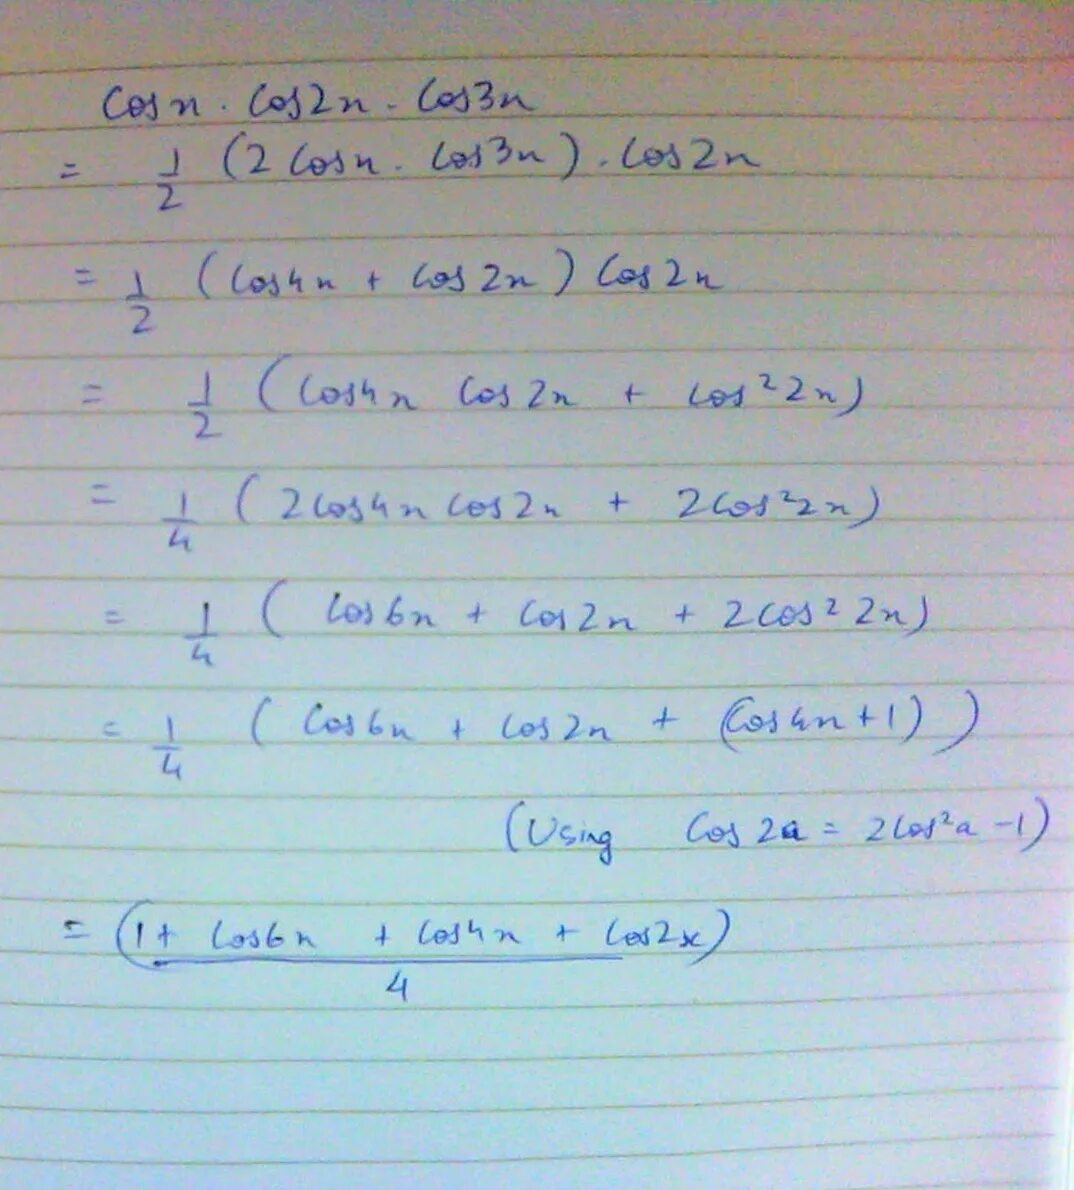 2xcosx 8cosx x 4. Cos2x+cos3x. Cosx=cos3x. Cosx cos2x cos3x. Cos3x+4=0.